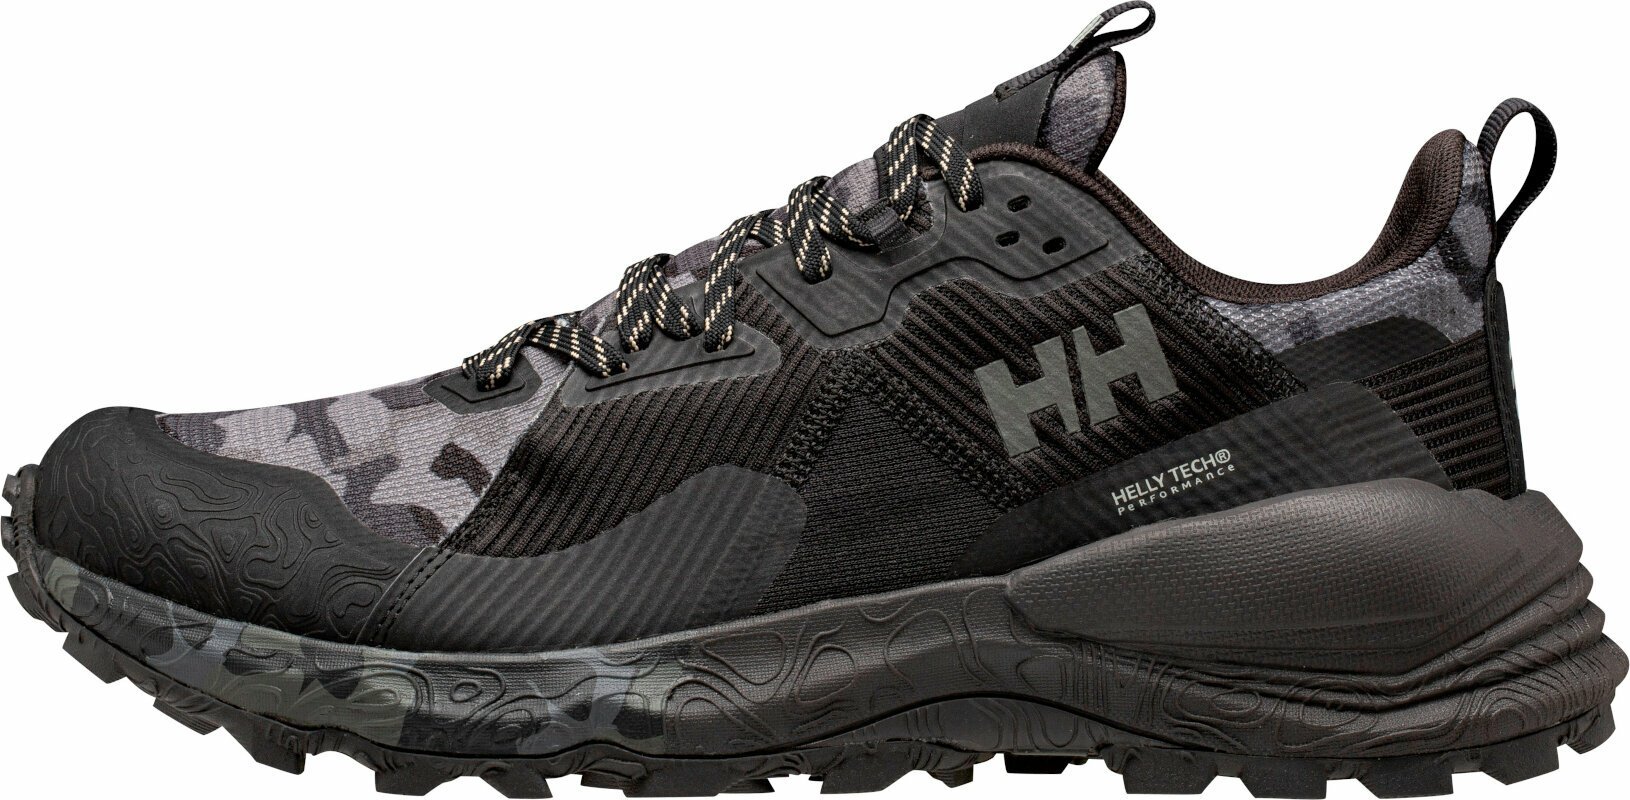 Chaussures de trail running Helly Hansen Men's Hawk Stapro Trail Running High Top Shoes  Black/Phantom Ebony 41 Chaussures de trail running